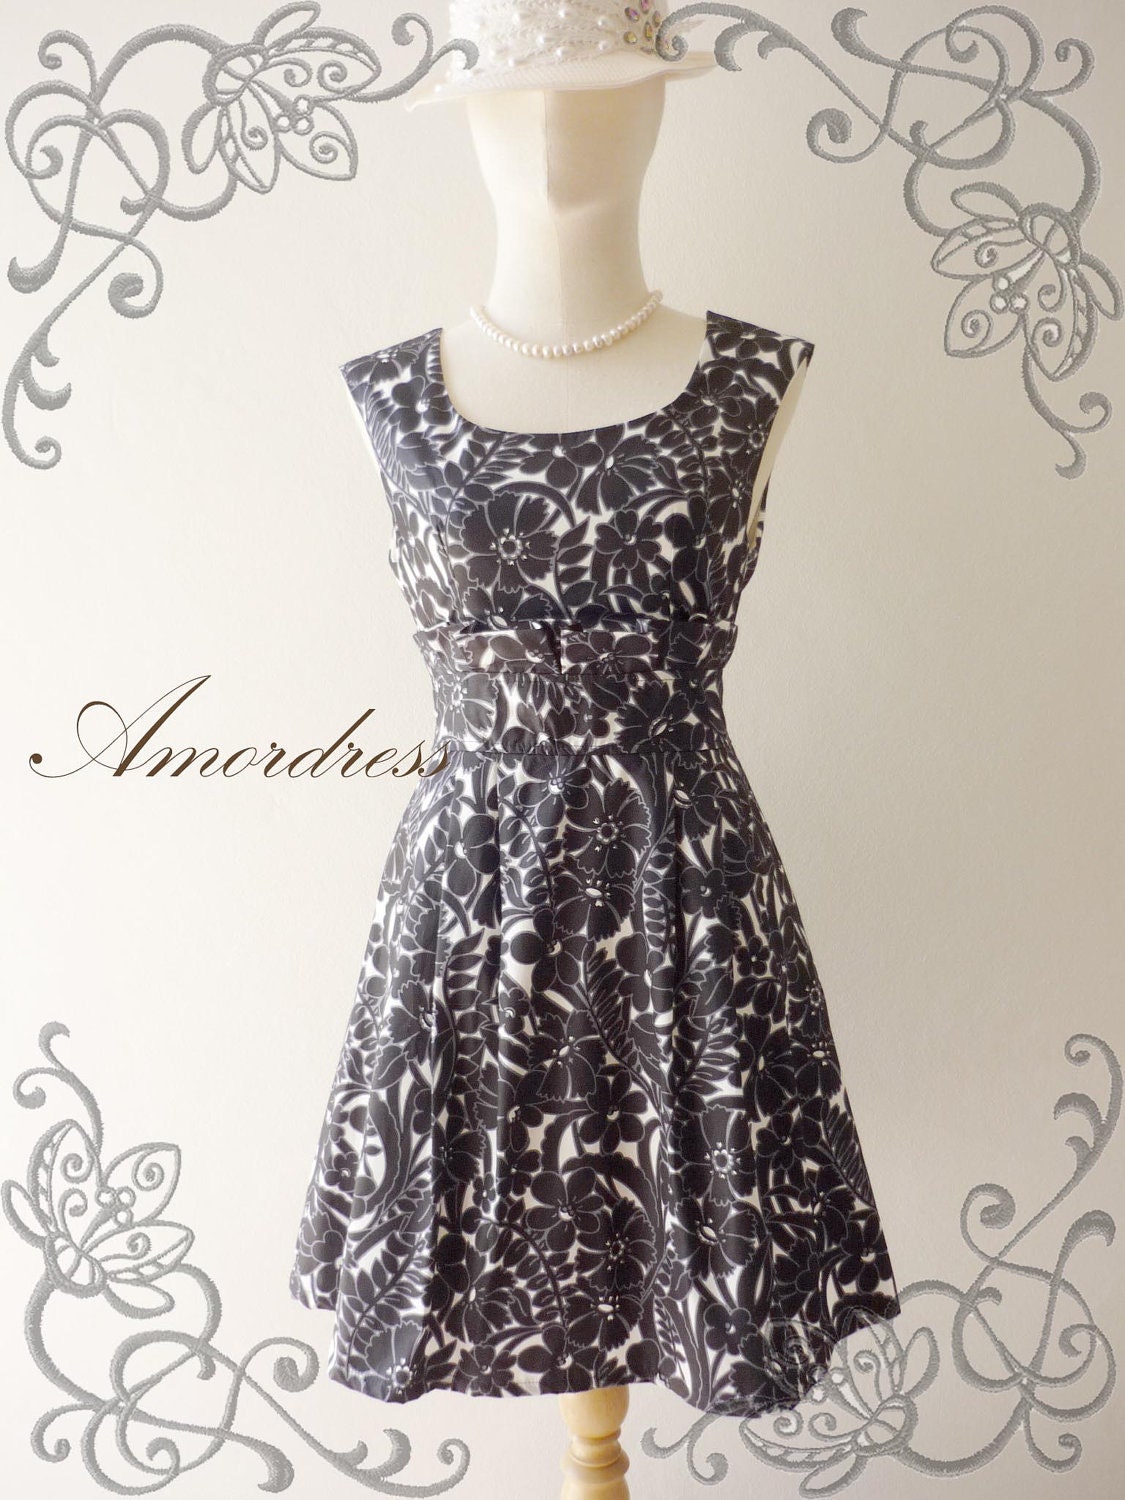 NEW--Amor Vintage Inspired- Darling Dress-Adorable Black Floral in Wonderland Cotton Dress for Any Occasion-Fit S-M-